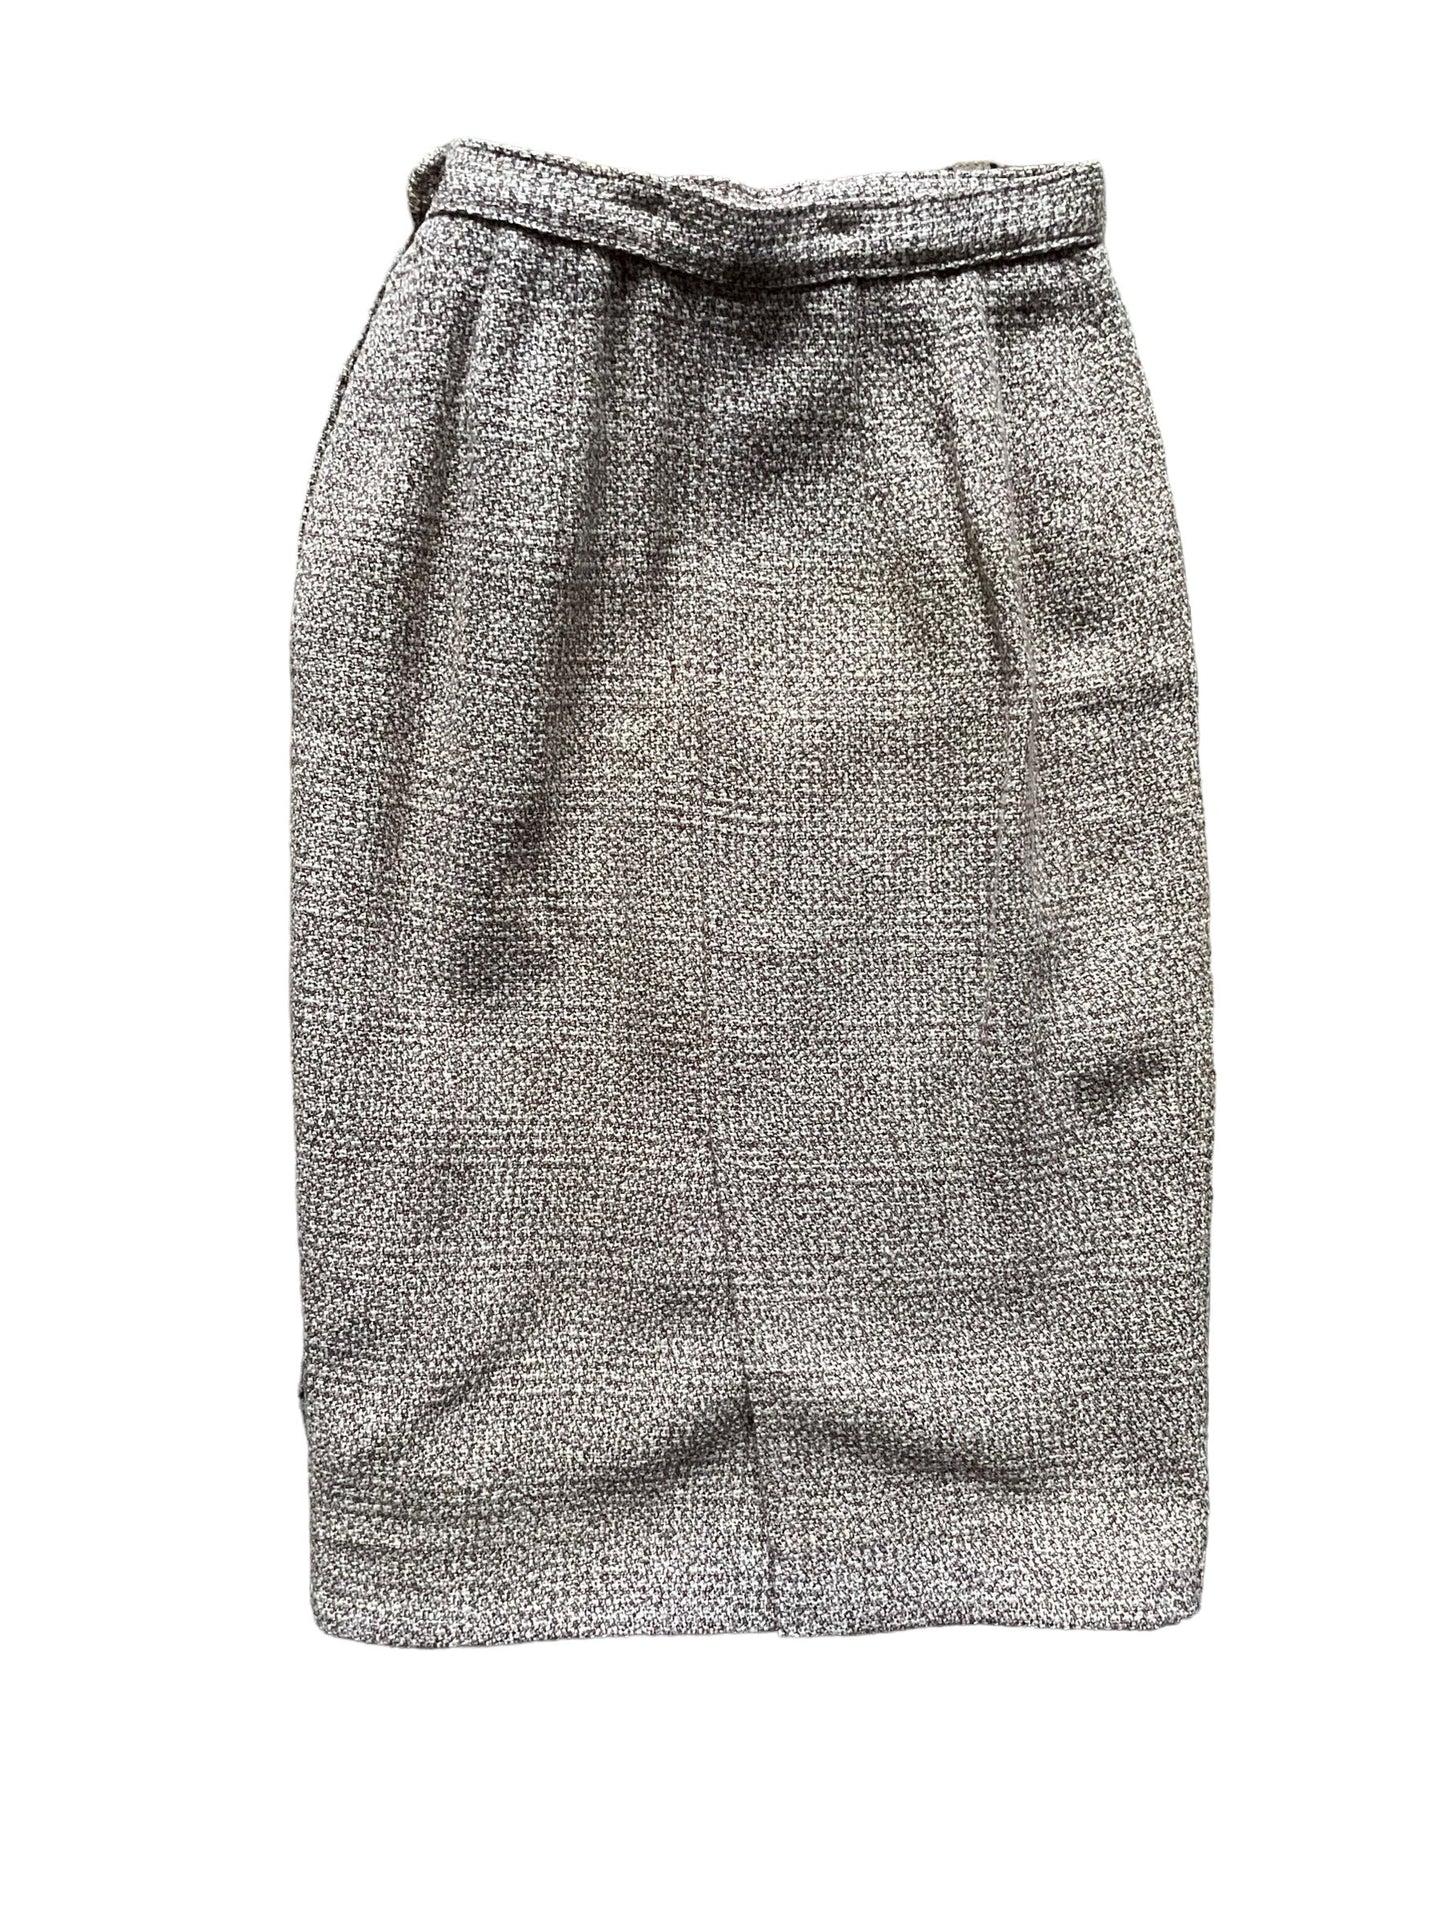 Full back of skirt Vintage 1950s Wool Skirt and Top Set SZ M  |  Barn Owl Vintage Skirt Sets | Seattle Vintage Skirts